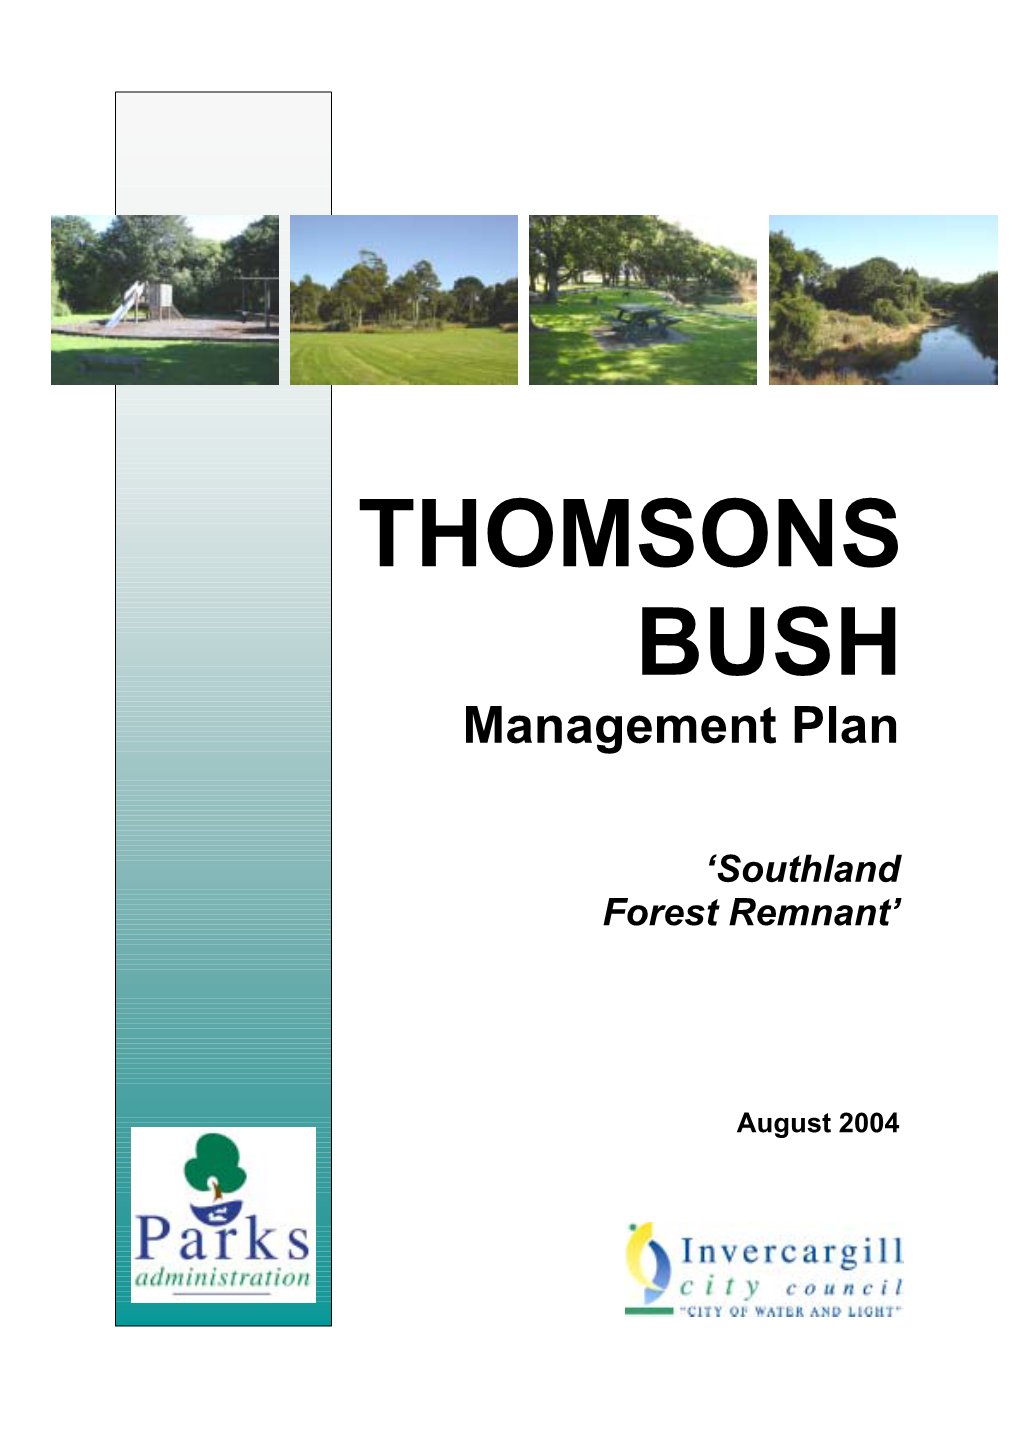 THOMSONS BUSH Management Plan